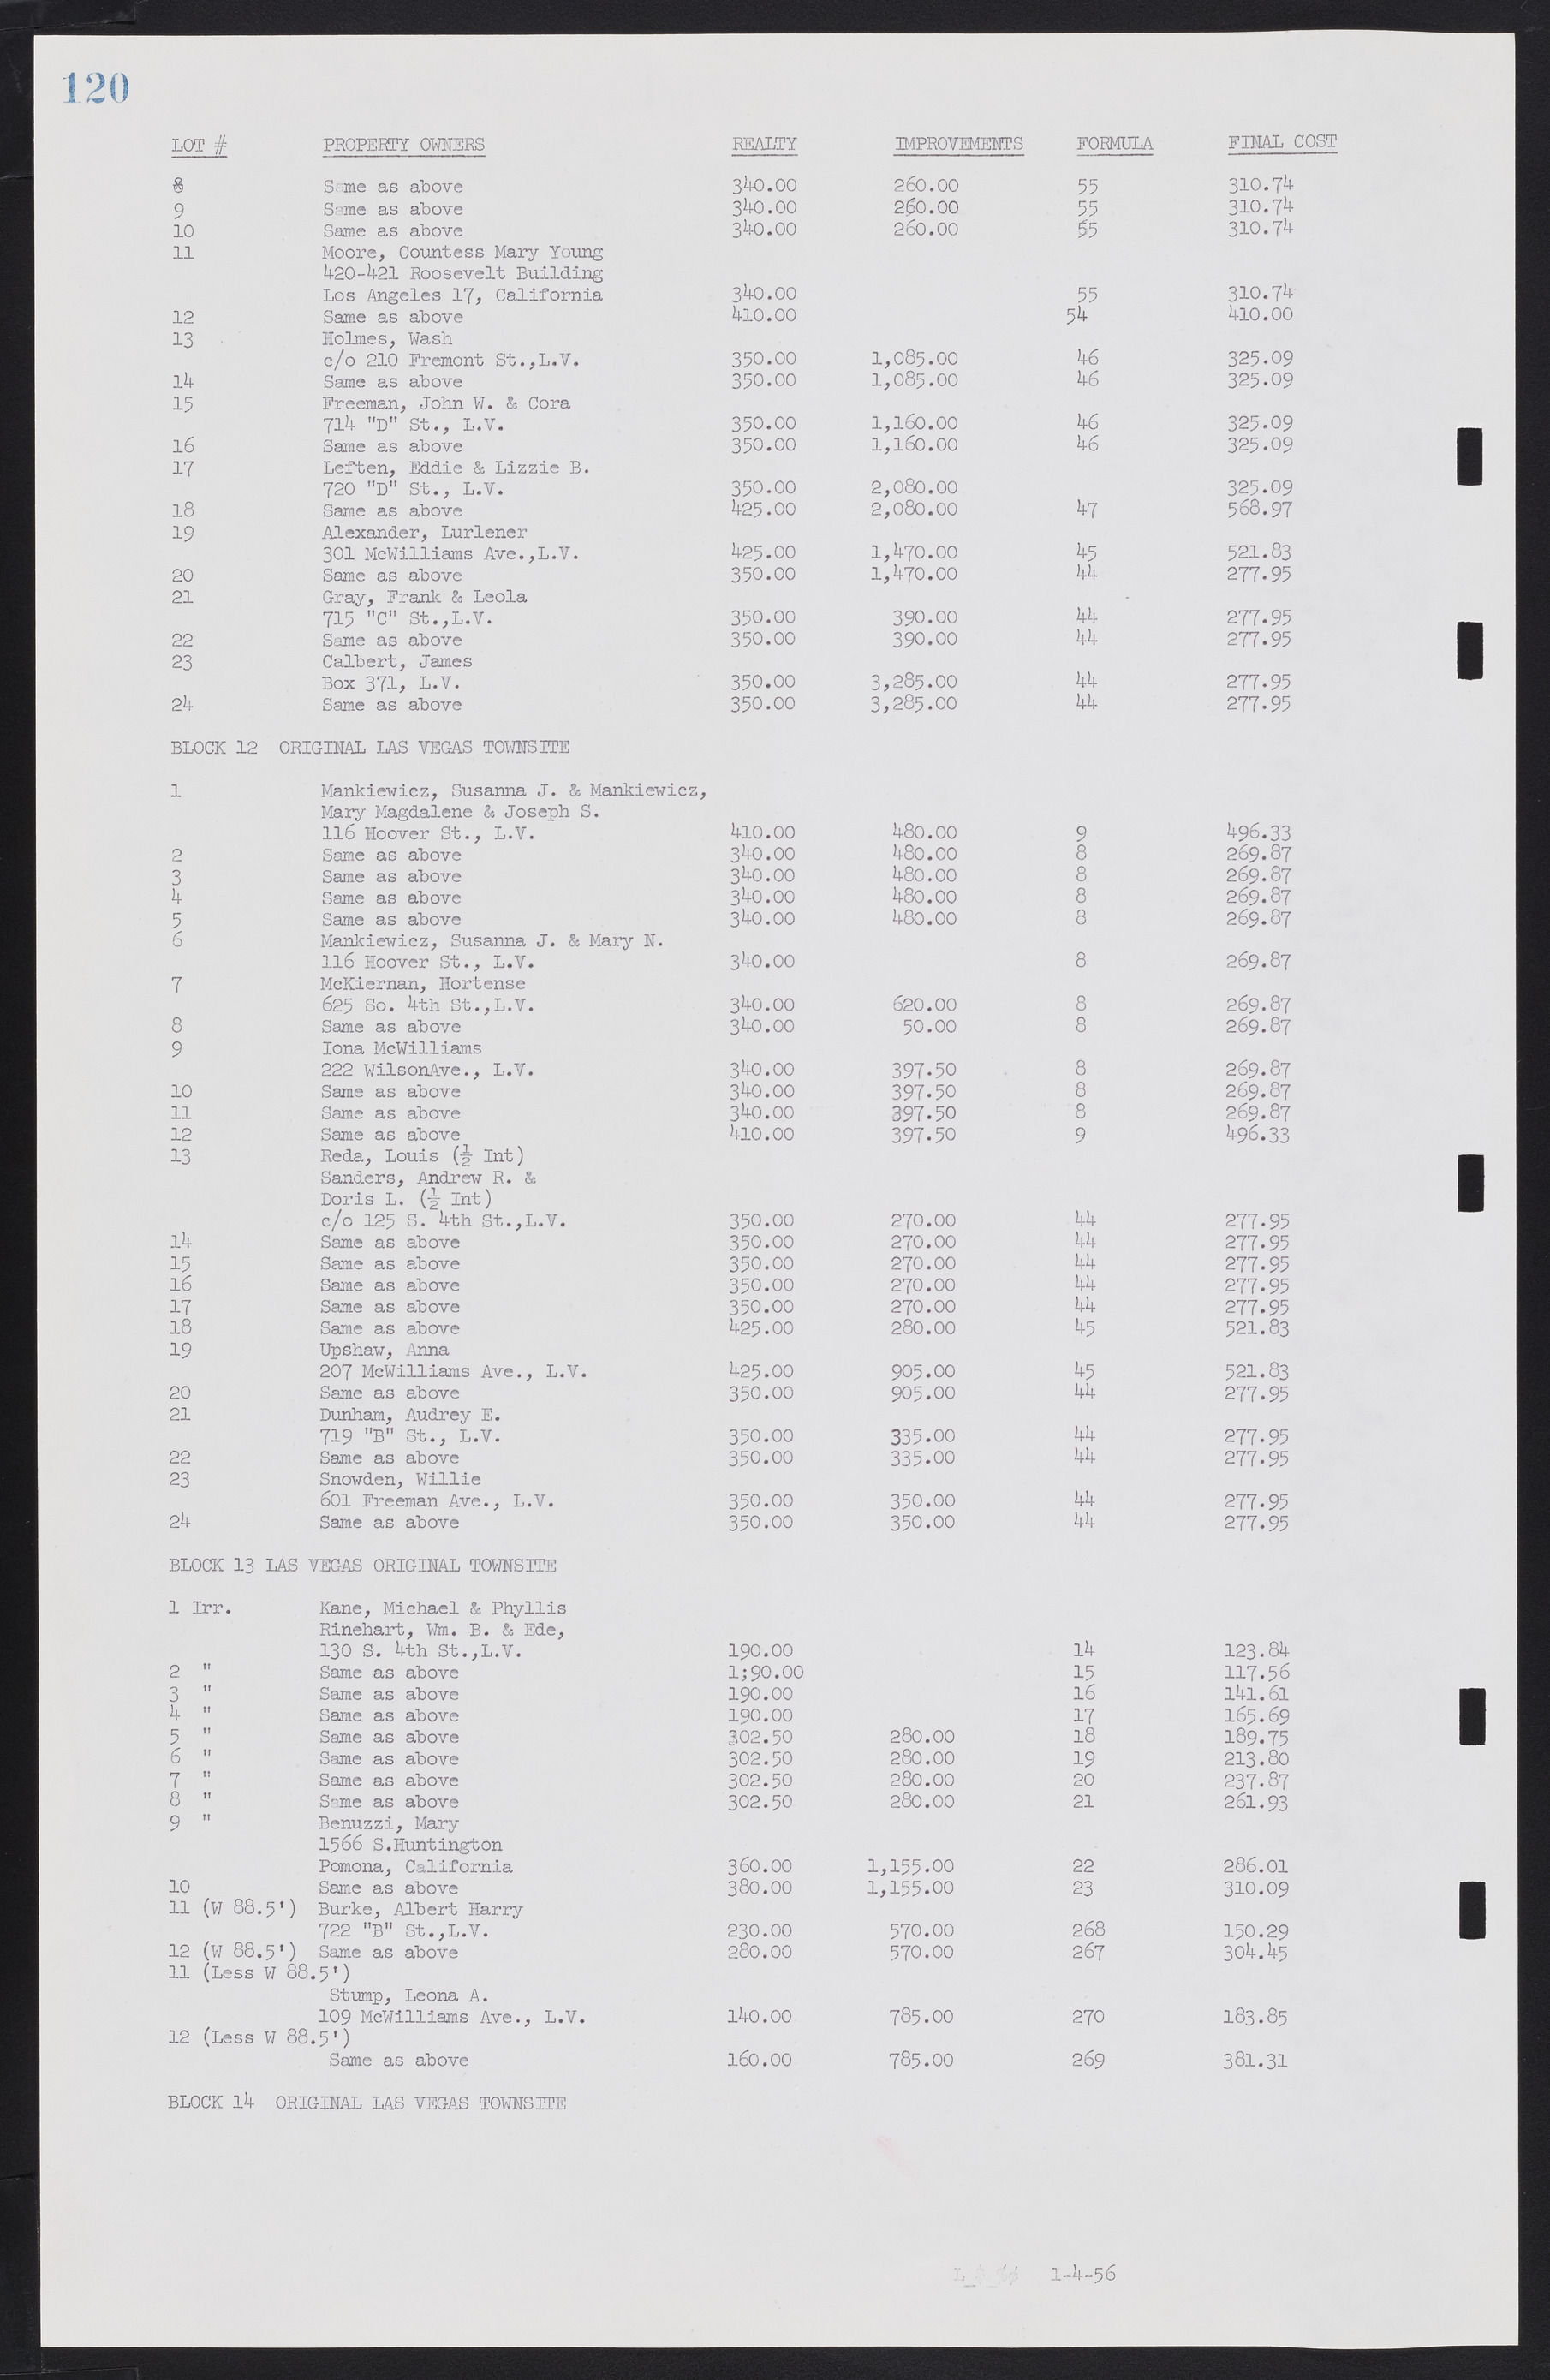 Las Vegas City Commission Minutes, September 21, 1955 to November 20, 1957, lvc000010-130